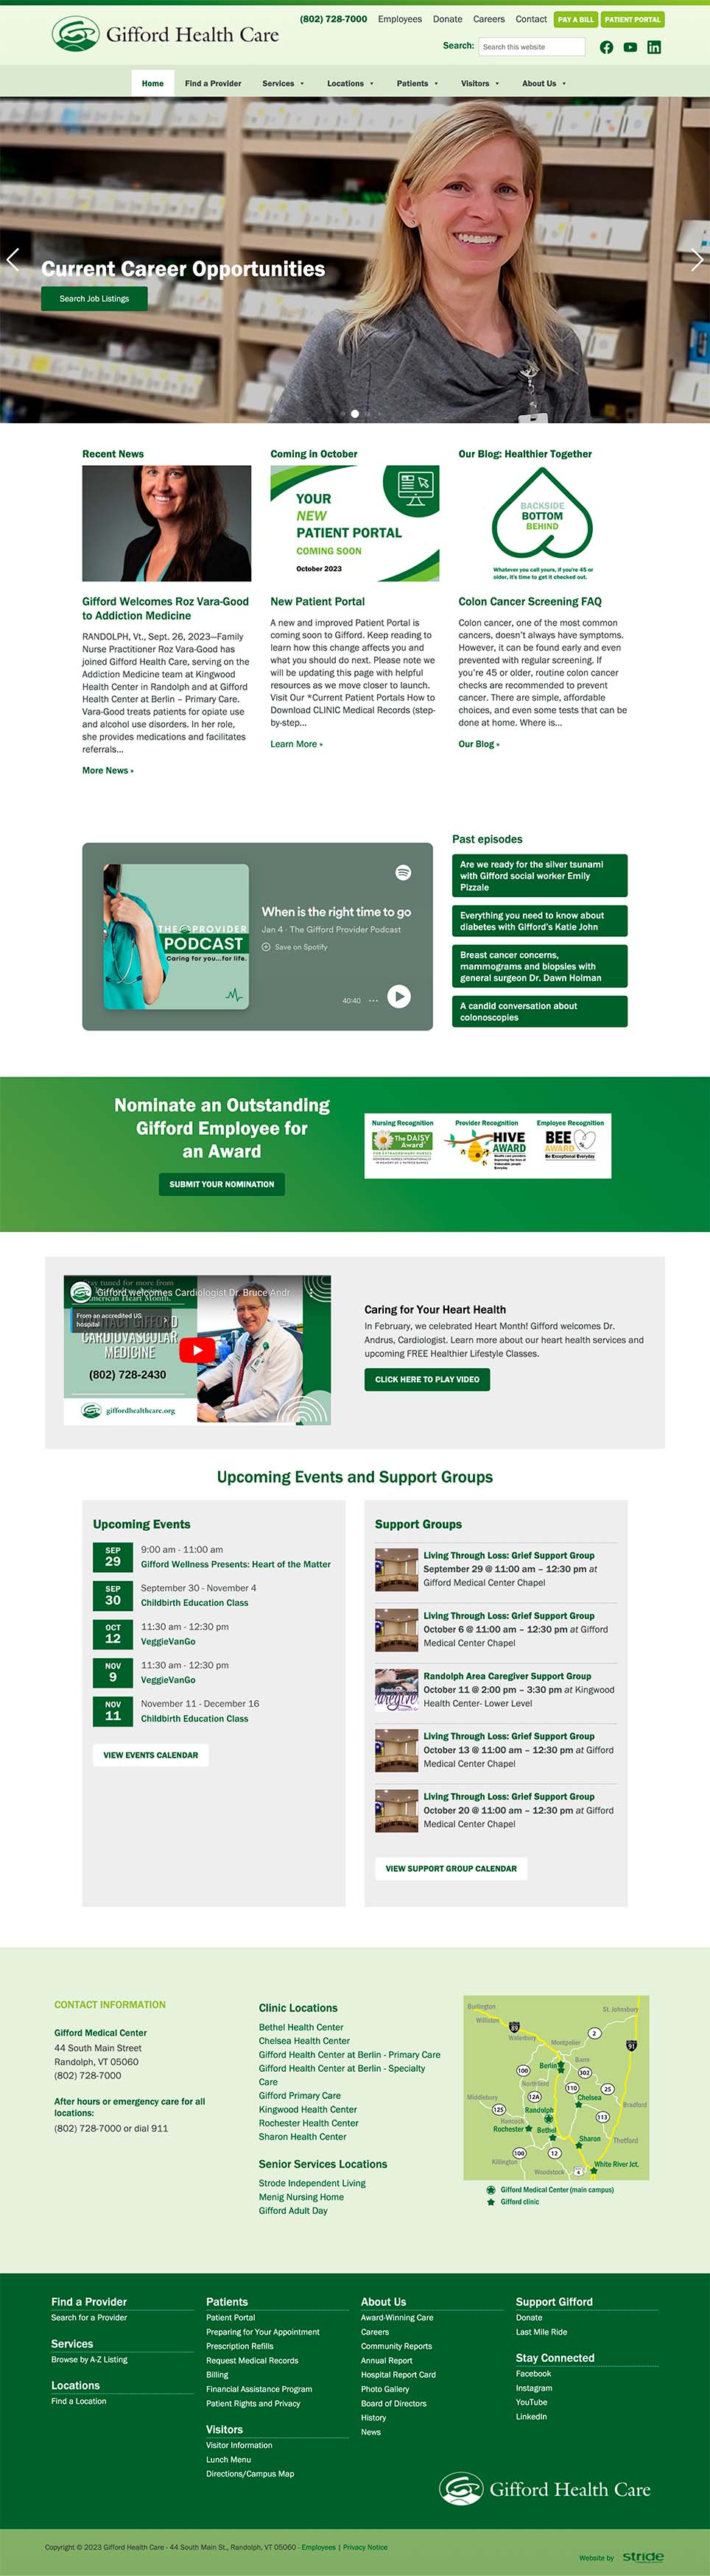 Gifford Healthcare Website